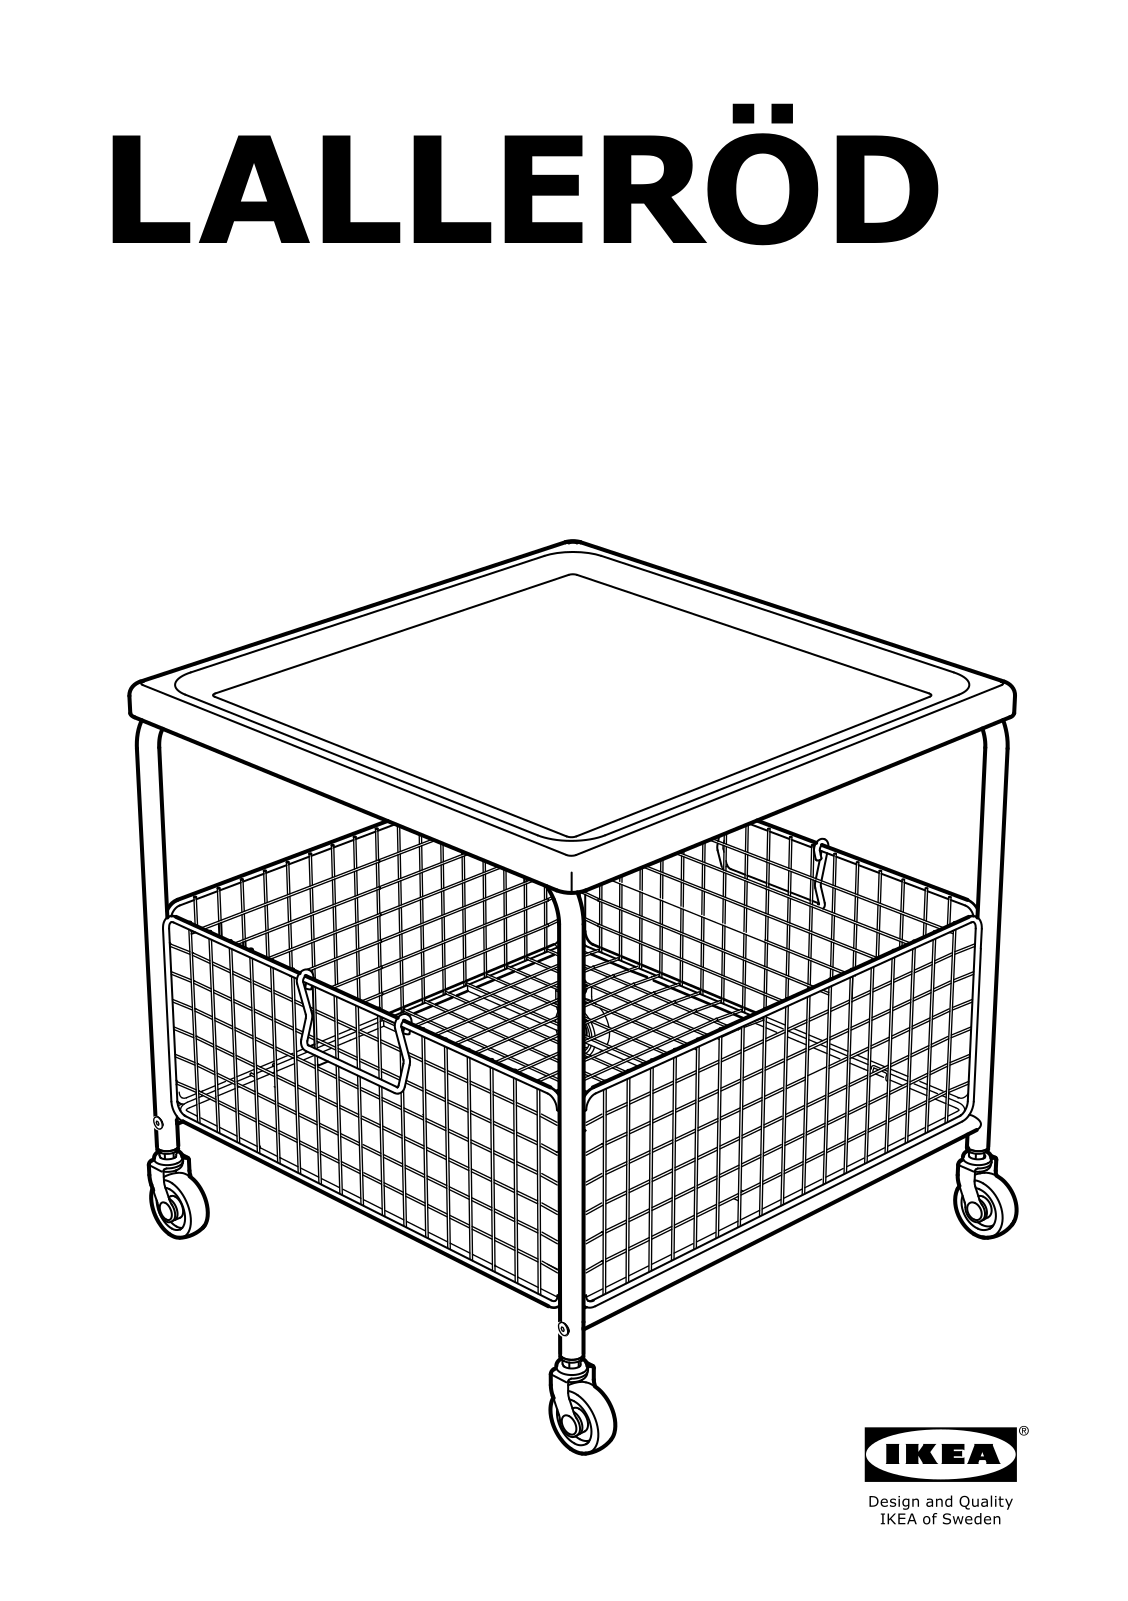 IKEA LALLEROD User Manual